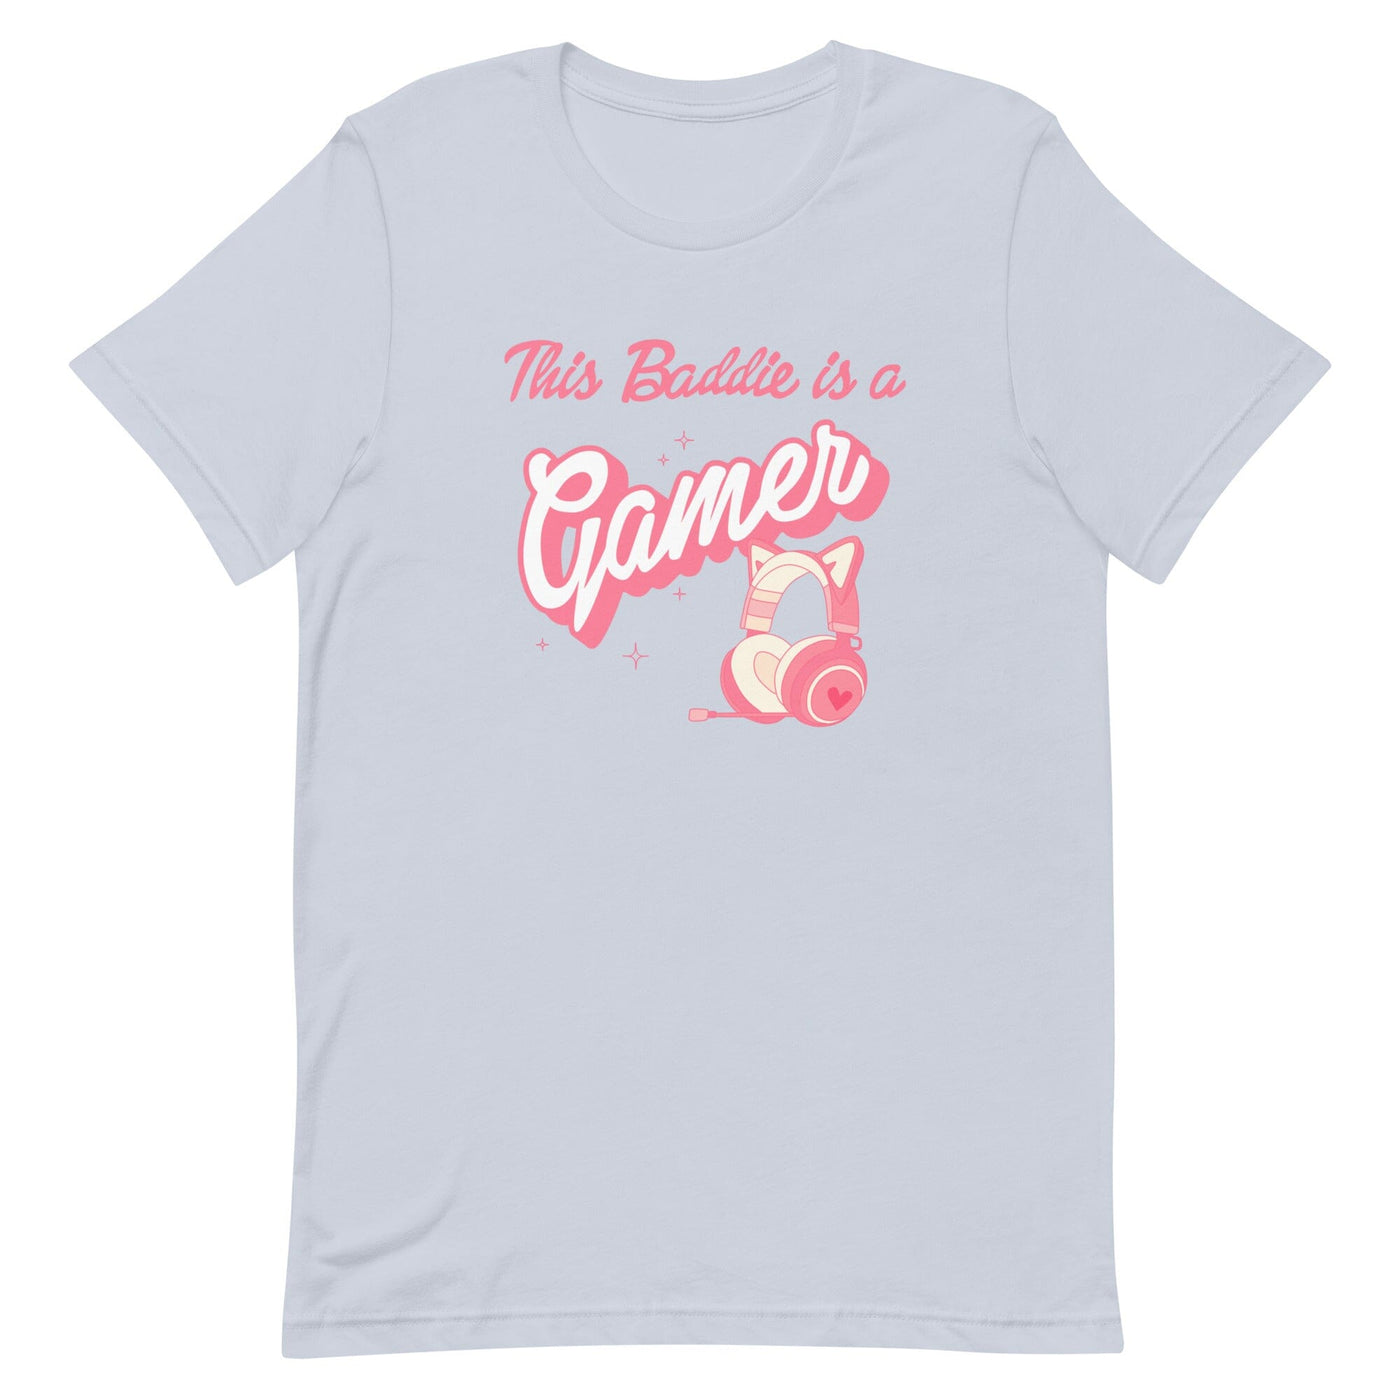 This Baddie is a Gamer | Unisex t-shirt | Feminist Gamer Threads & Thistles Inventory Light Blue (Girly Girl) XS 